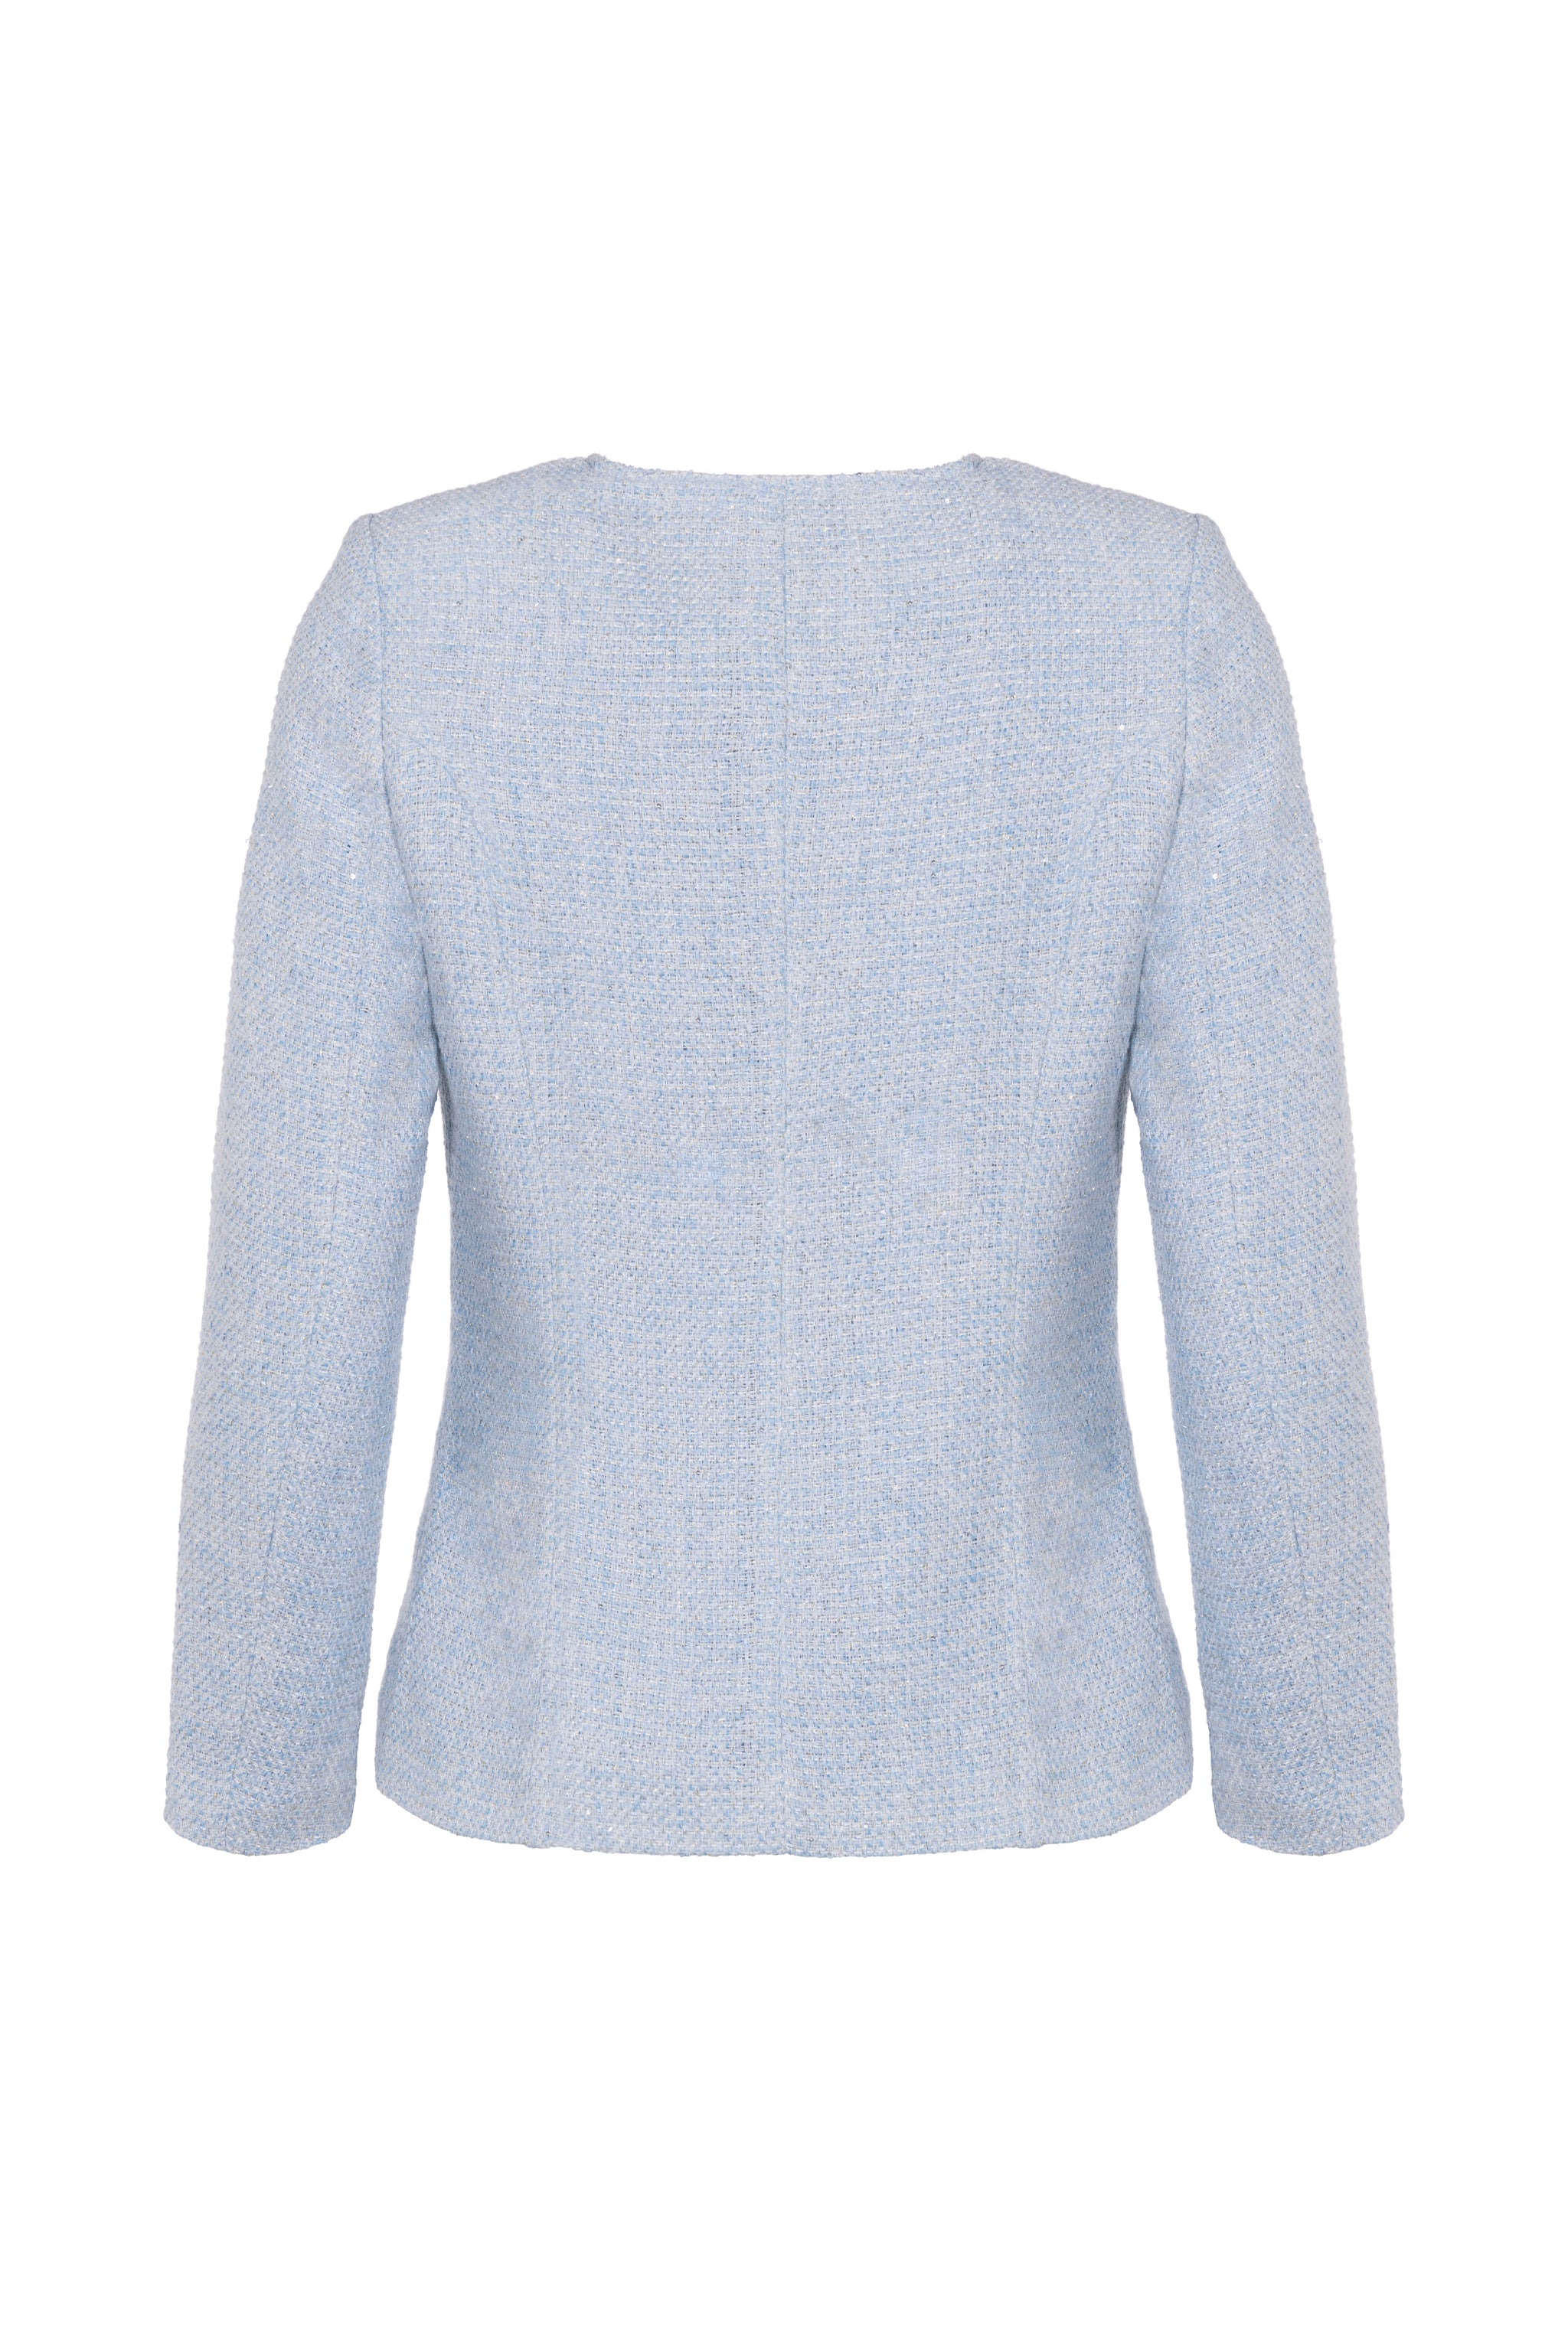 Light Weight Tweed Jacket (Powder Blue)